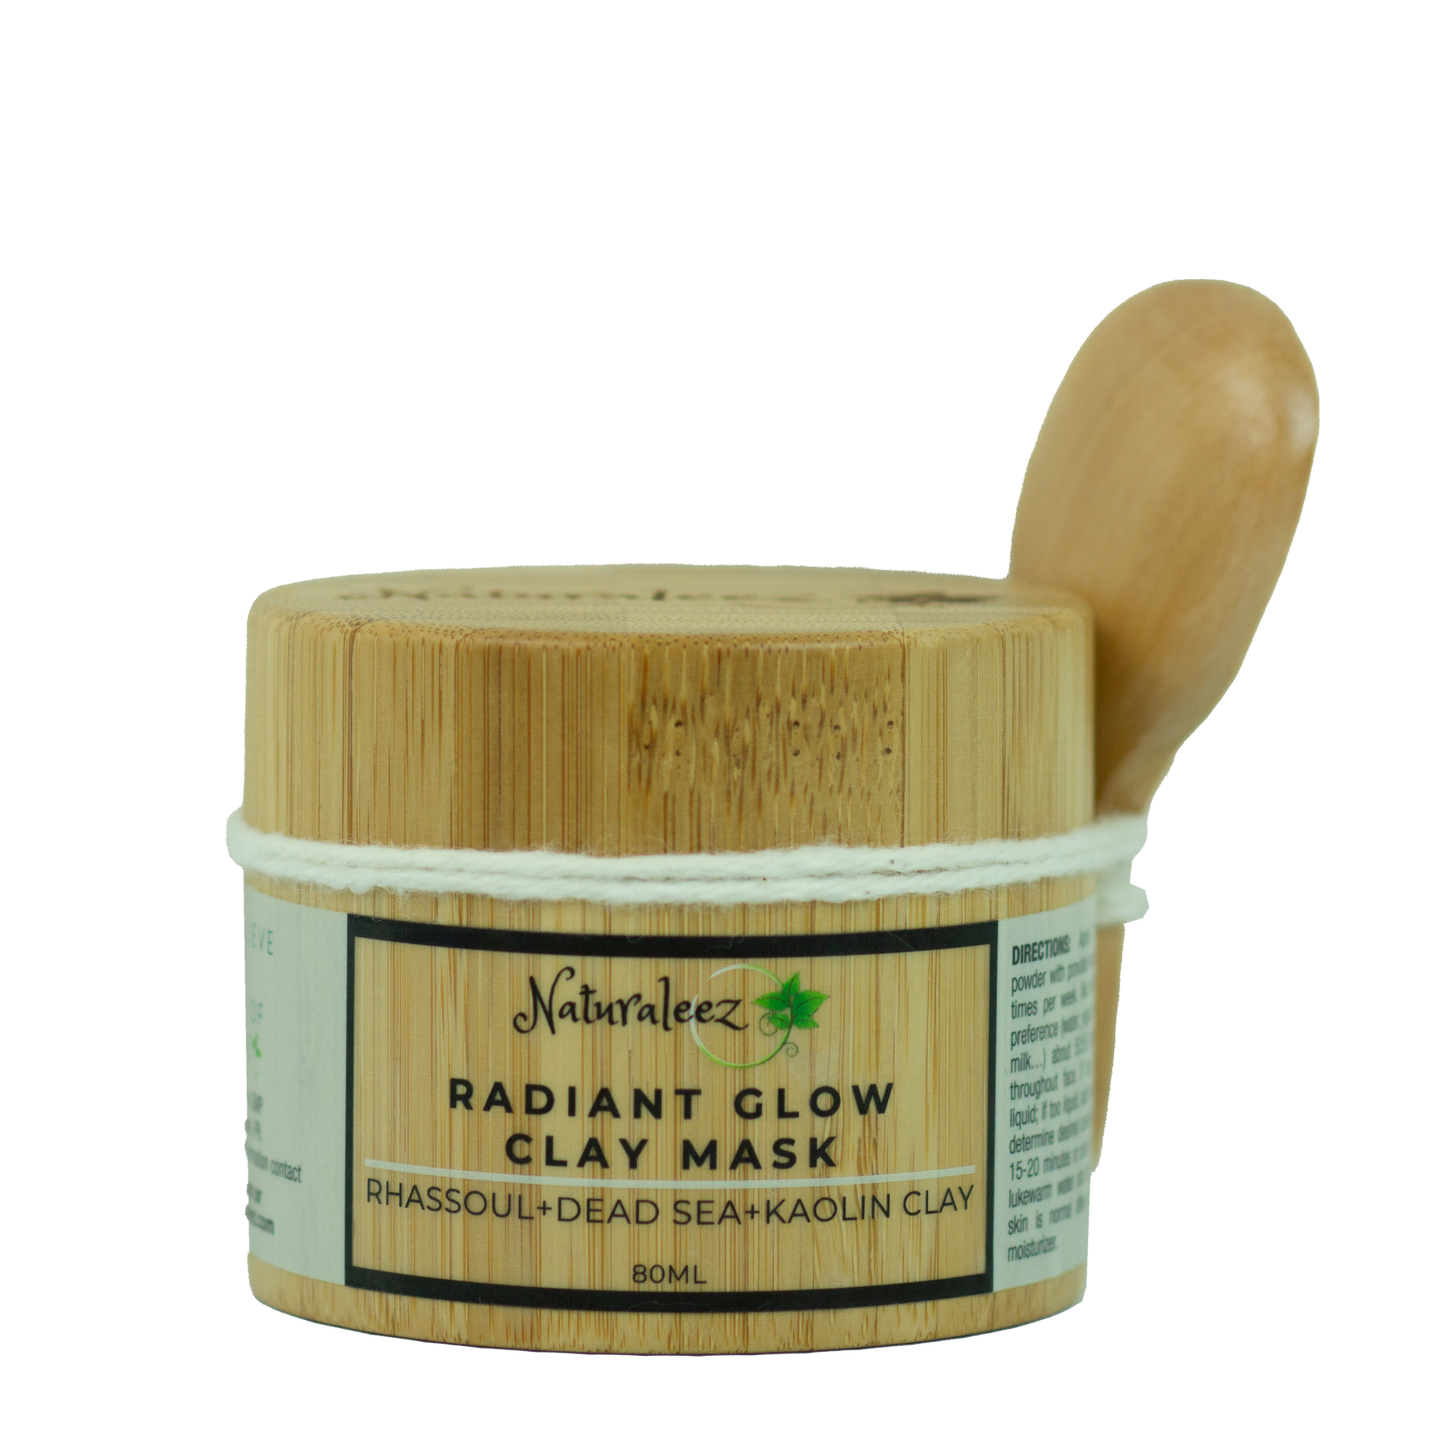 Naturaleez - Radiant Glow Clay Mask